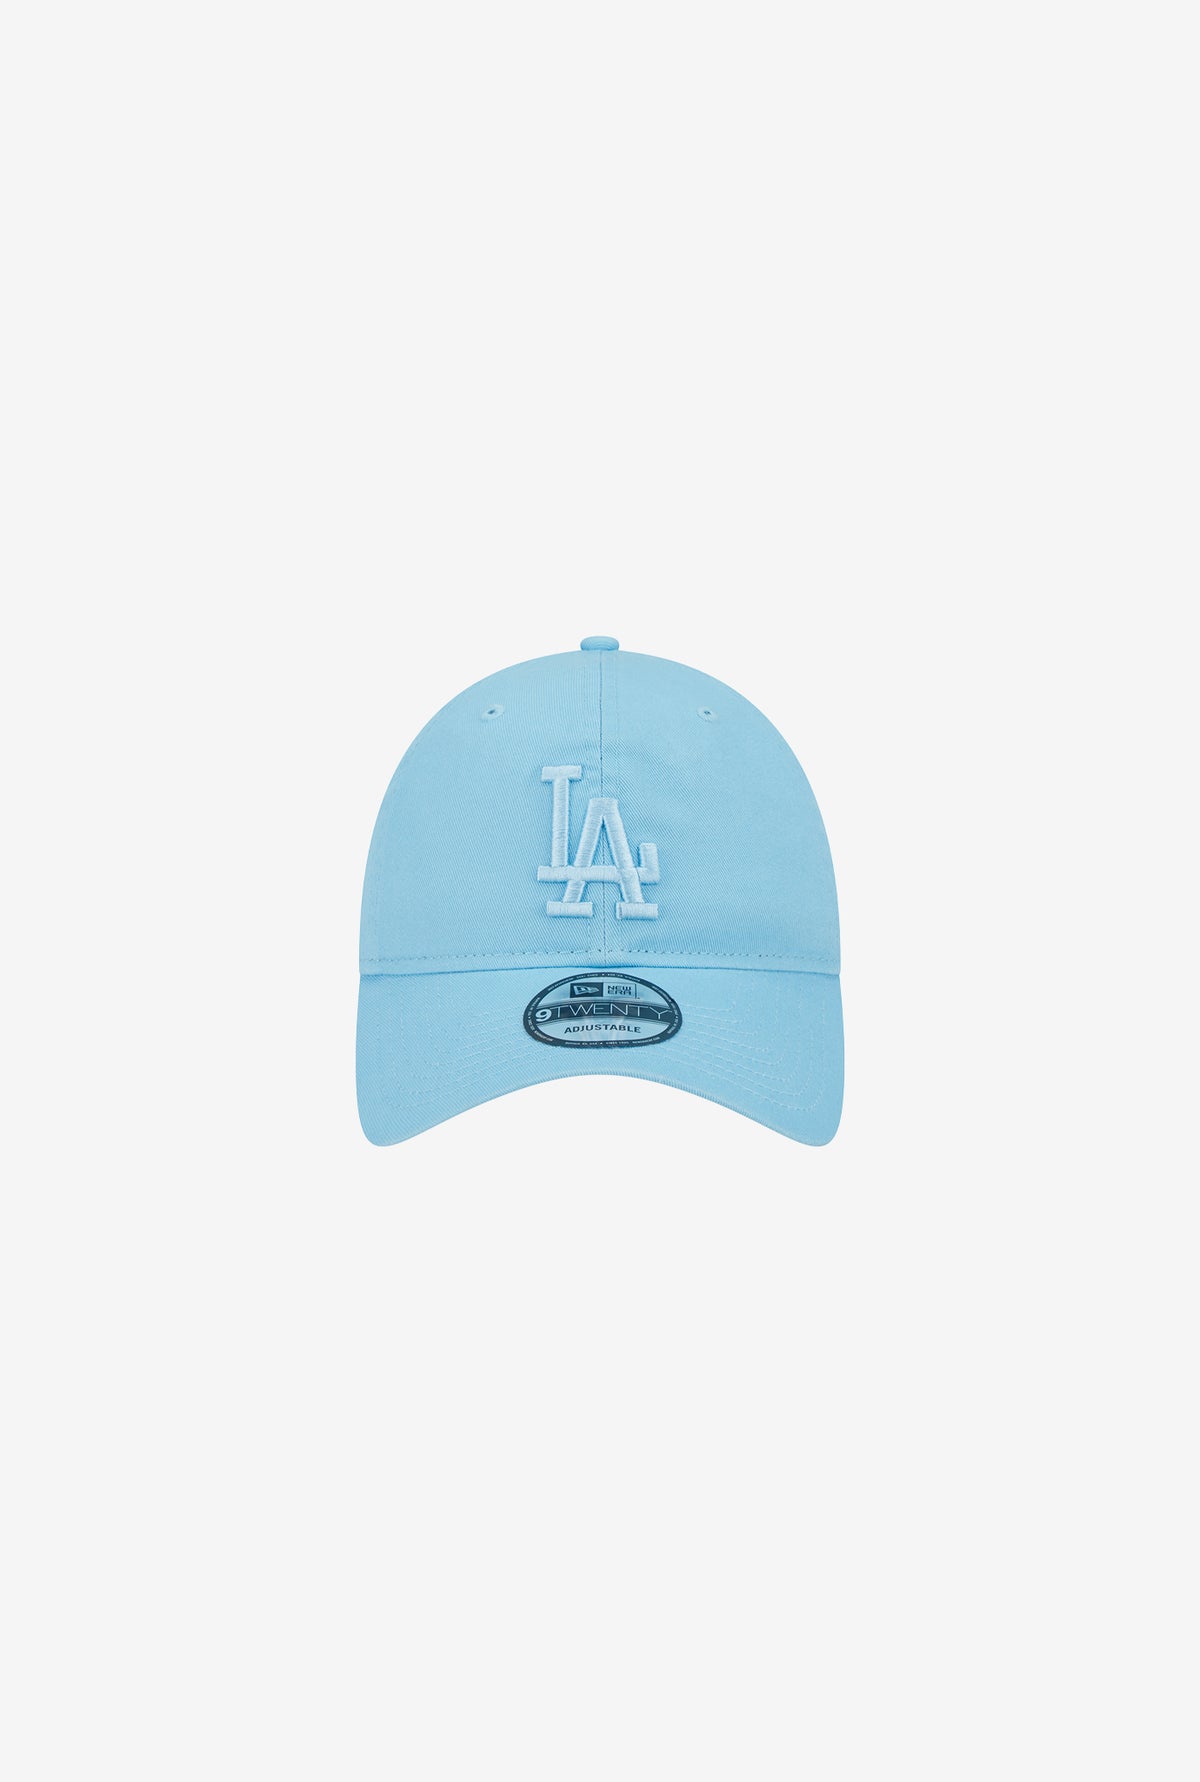 Los Angeles Dodgers 9TWENTY Color Pack - Sky Blue